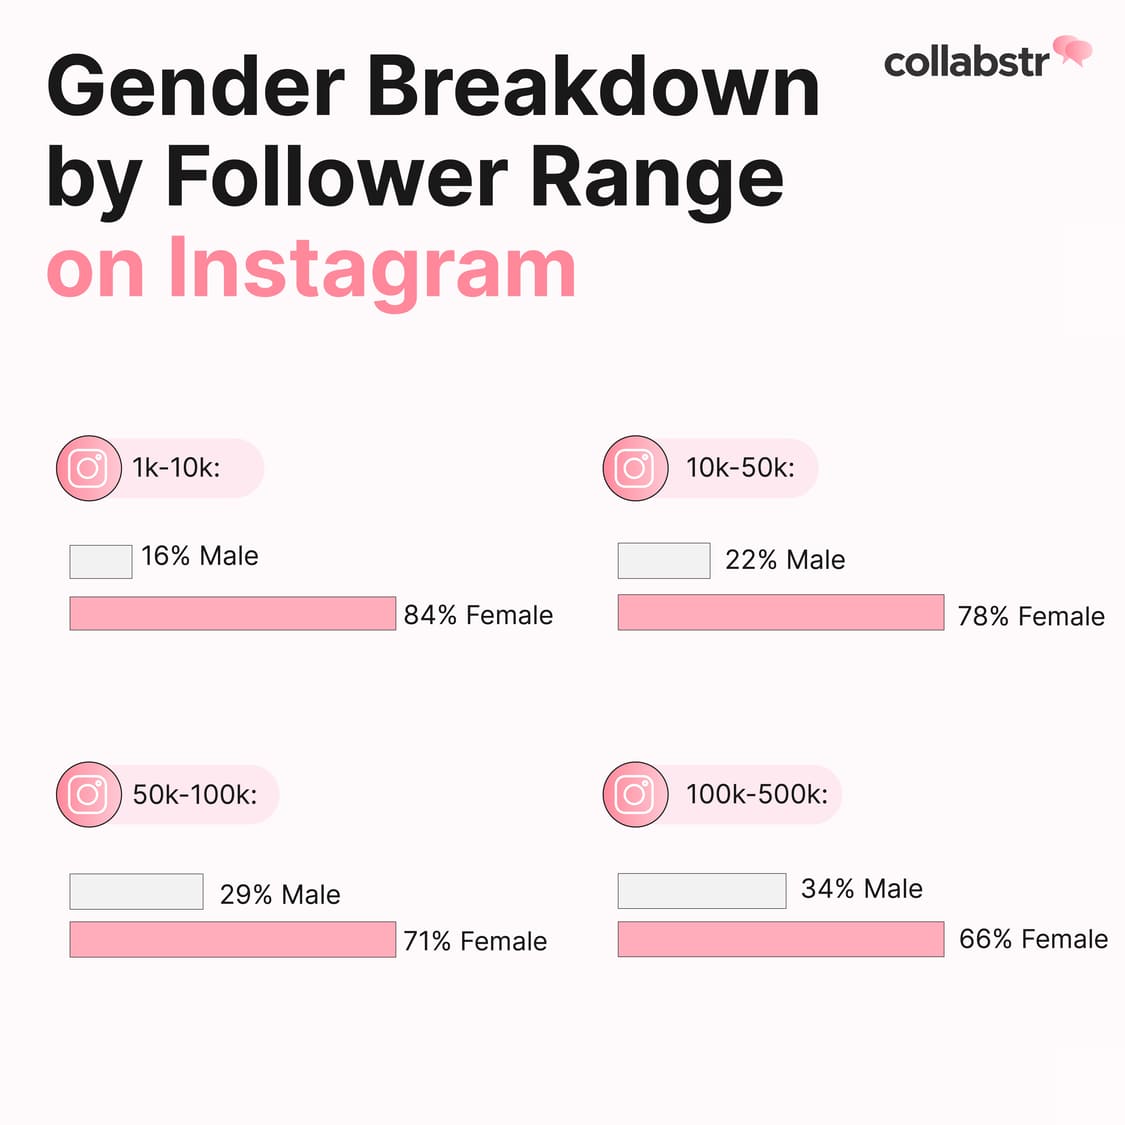 Gender breakdown of influencers on Instagram by follower range.